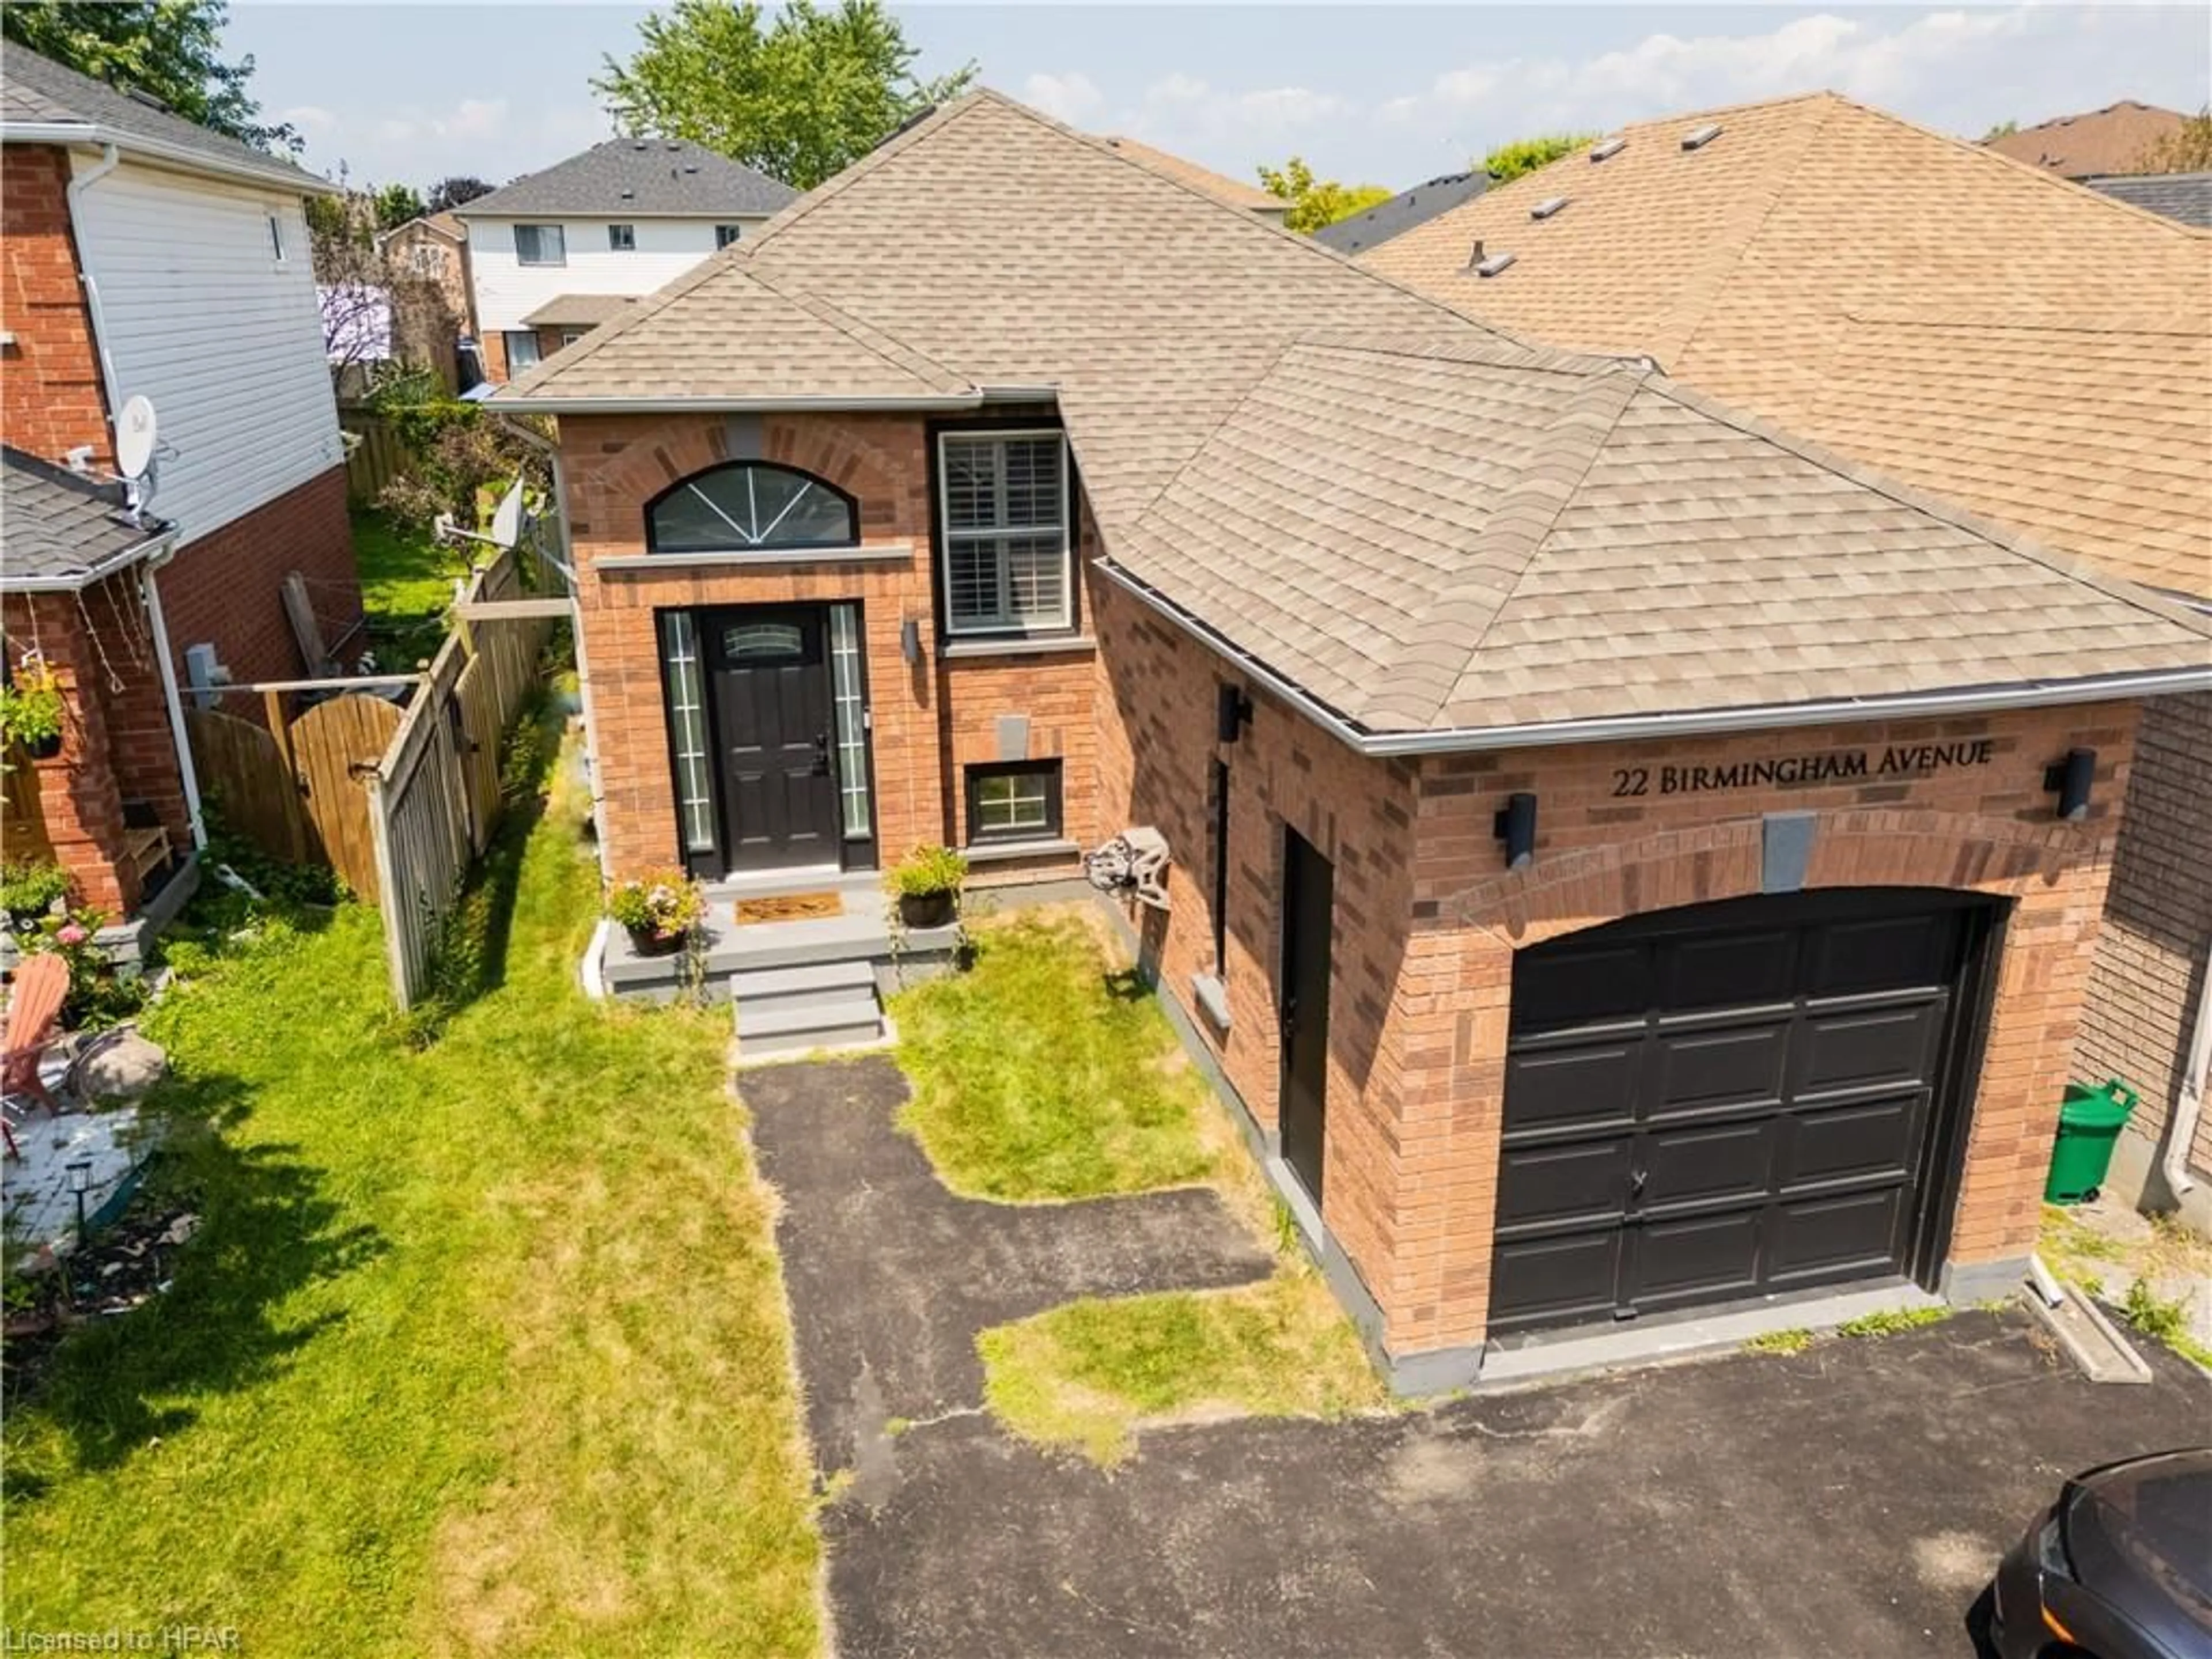 Home with brick exterior material for 22 Birmingham Ave, Clarington Ontario L1C 4Z6